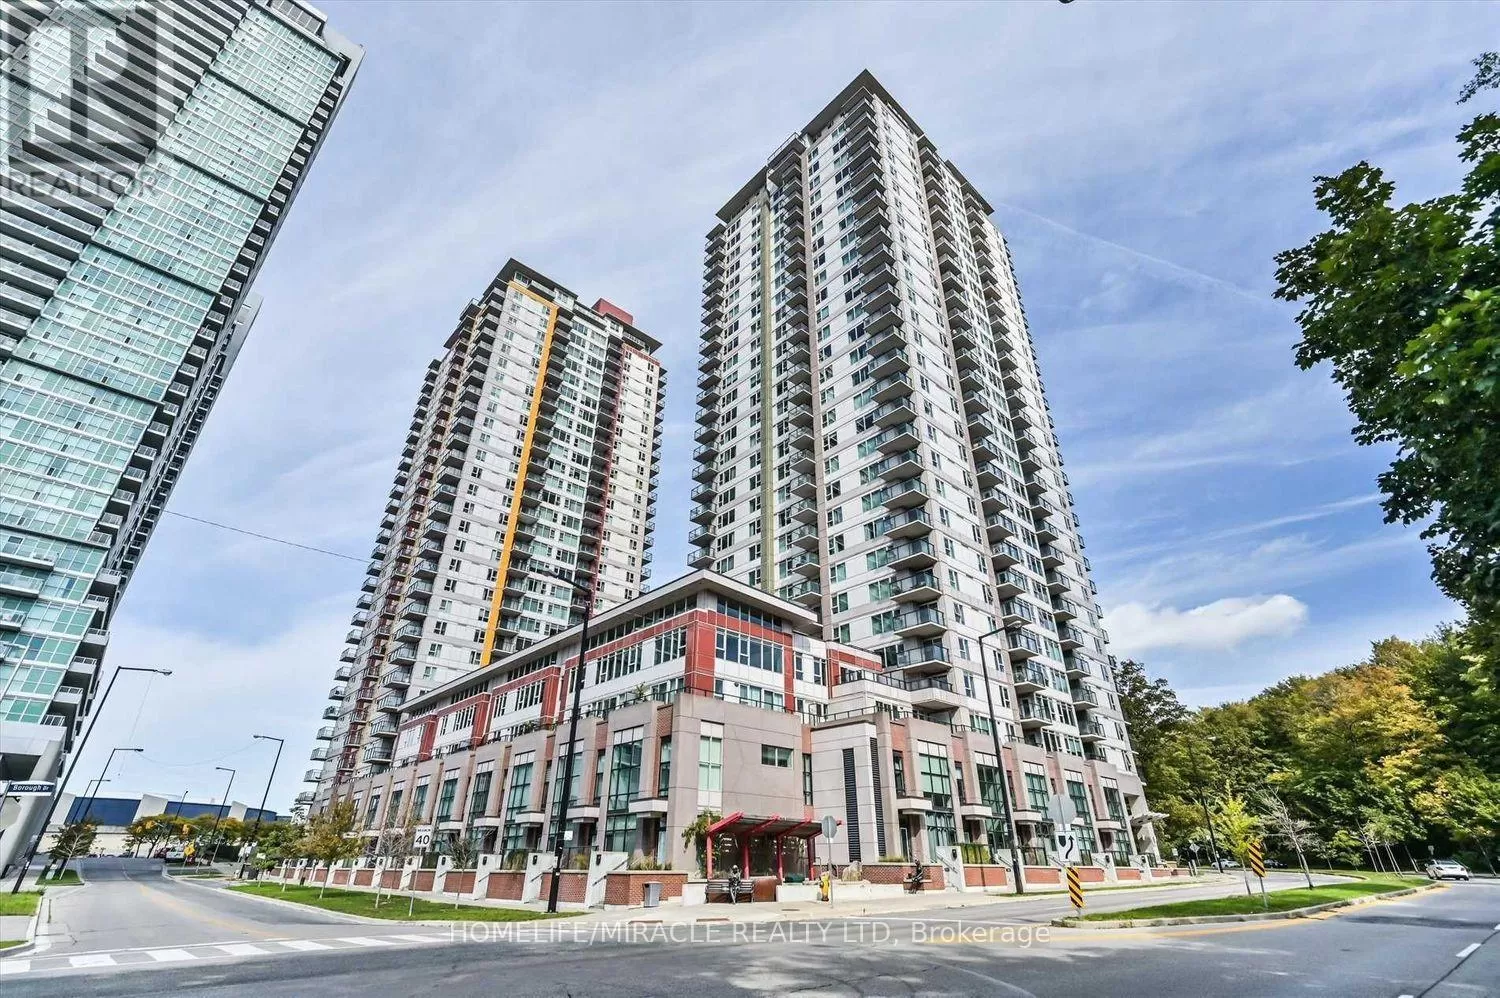 Apartment for rent: 1506 - 25 Town Centre Court, Toronto, Ontario M1P 0B4